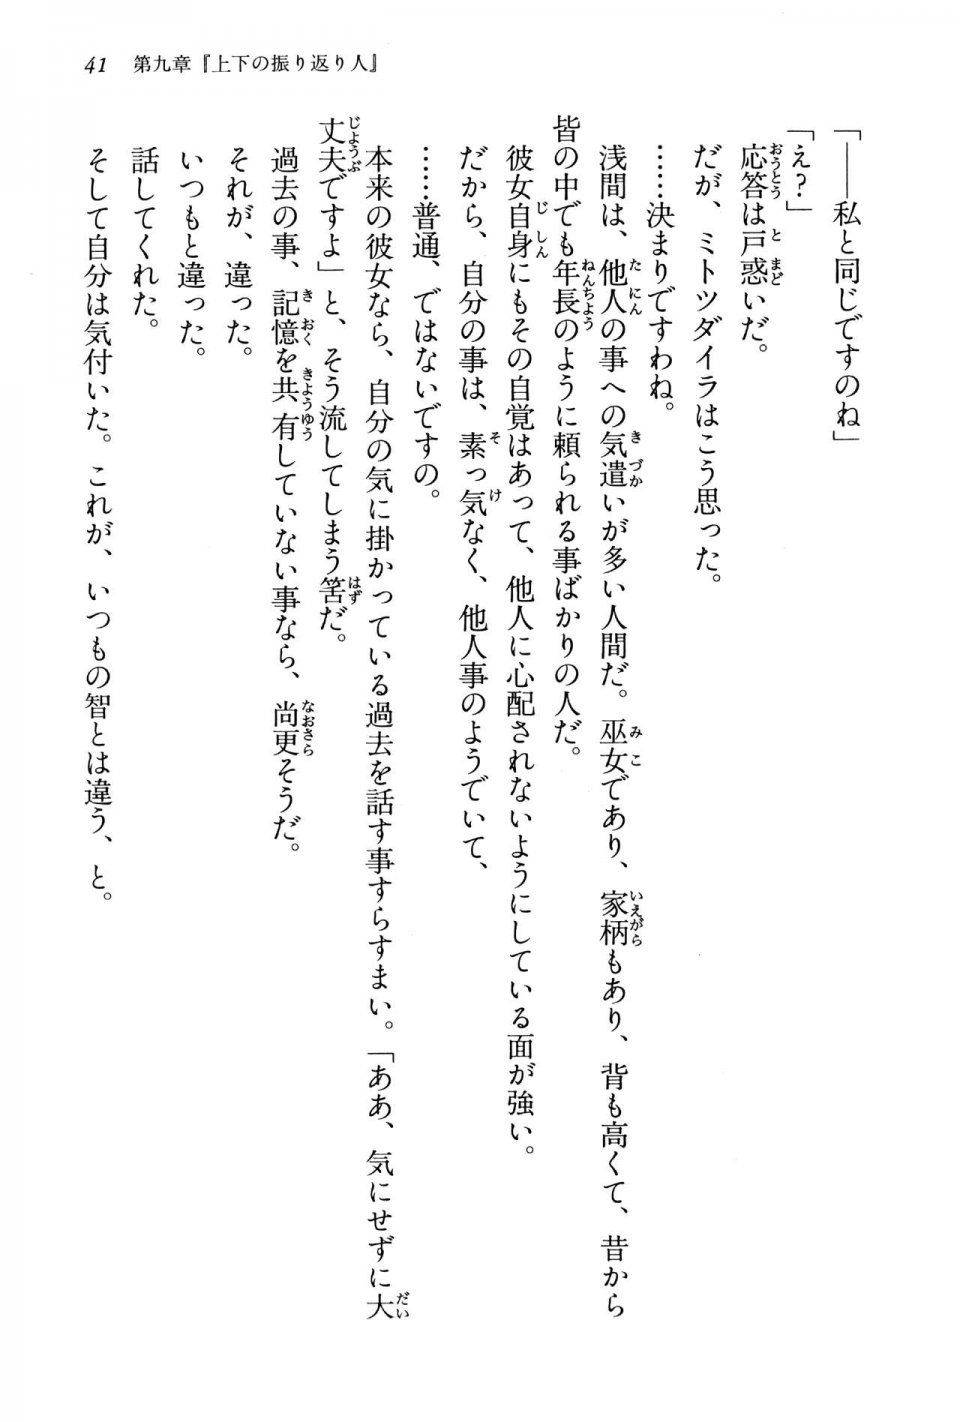 Kyoukai Senjou no Horizon BD Special Mininovel Vol 3(2A) - Photo #45